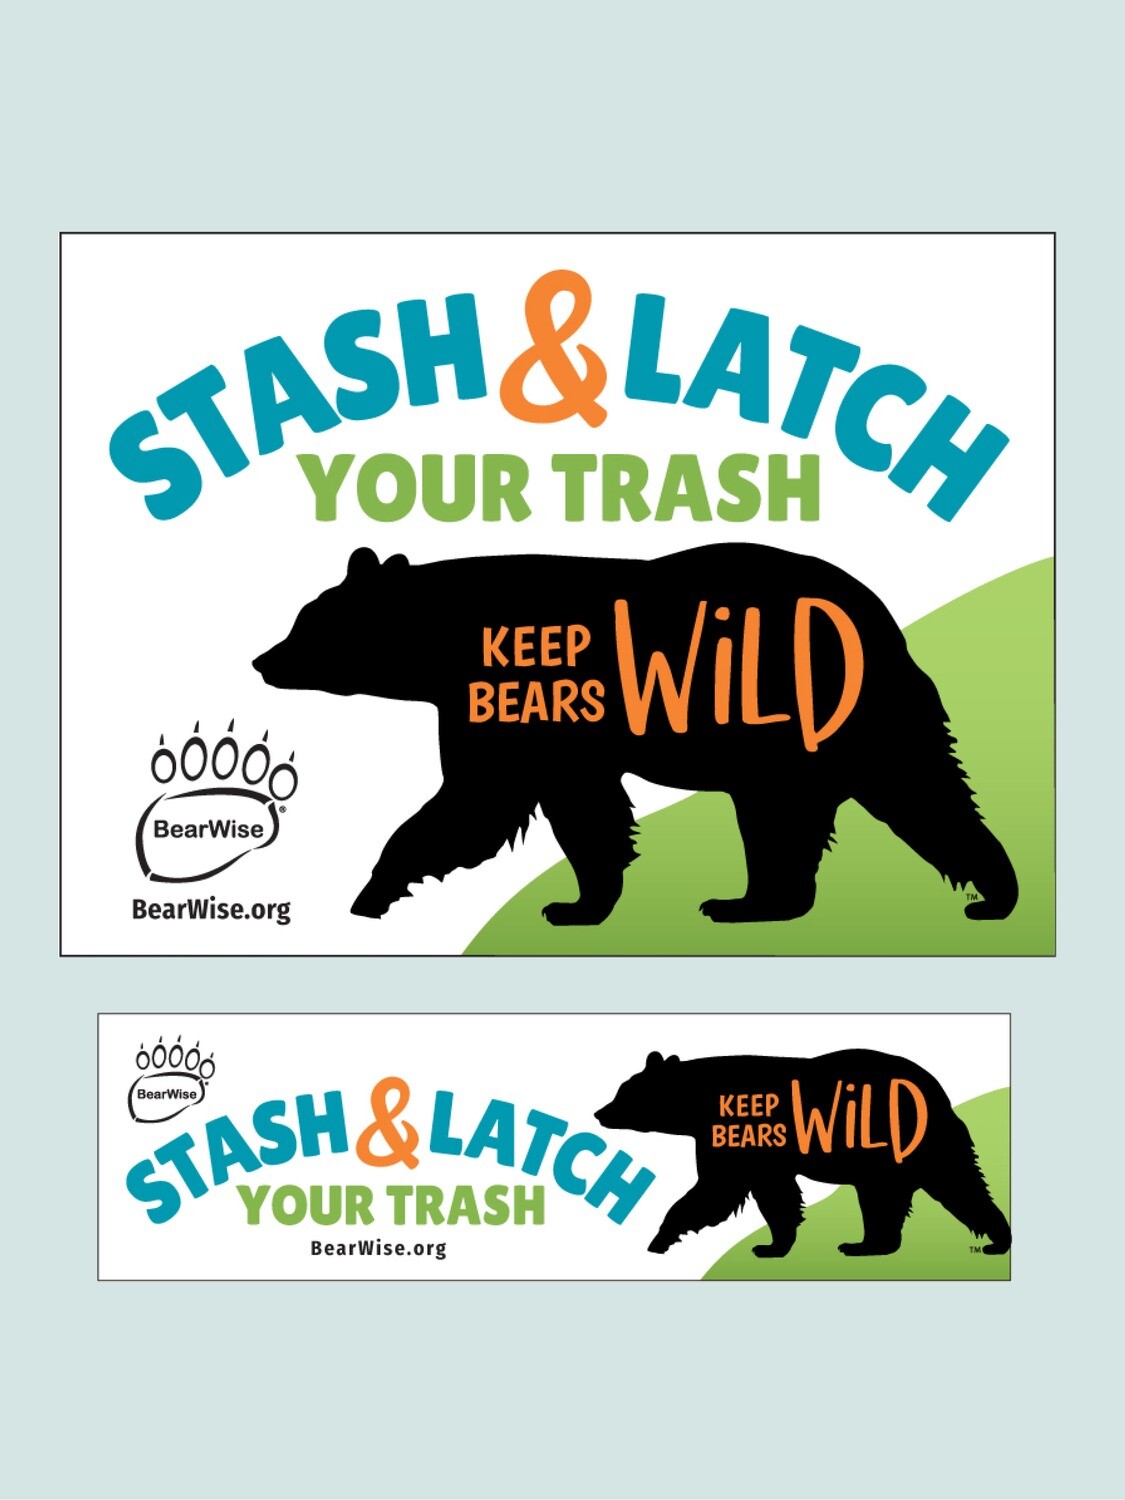 Stash & Latch Your Trash stickers